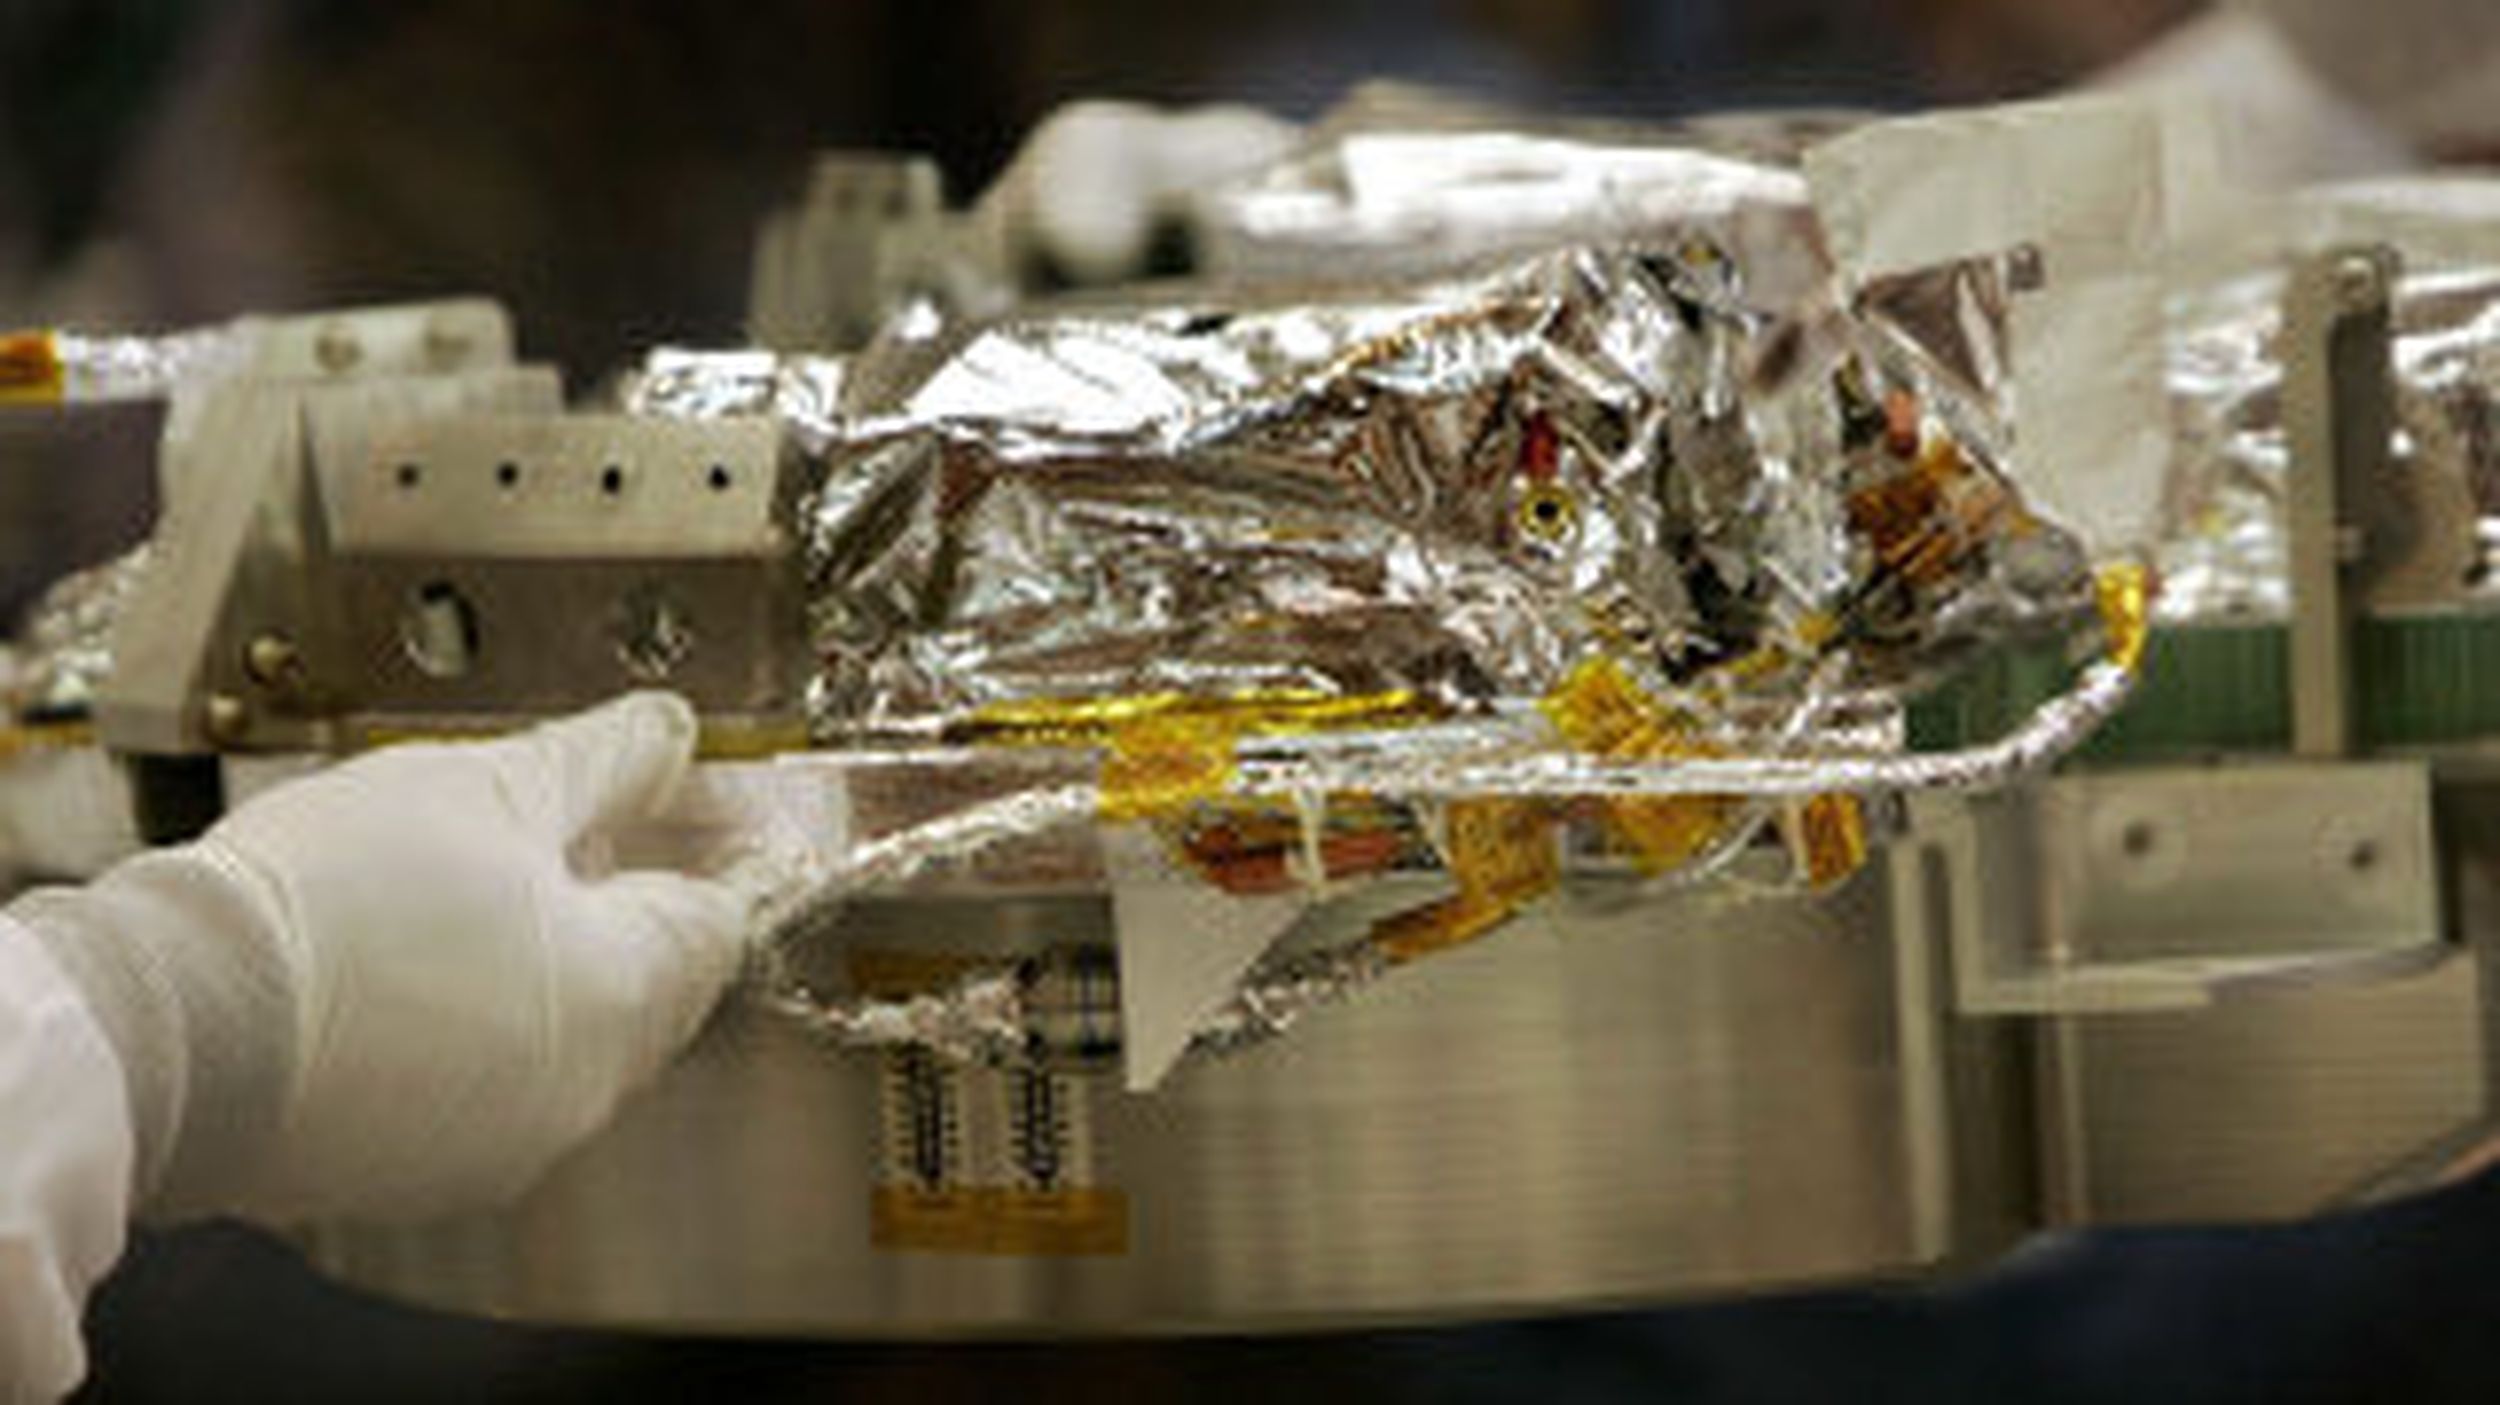 stardust space probe parts